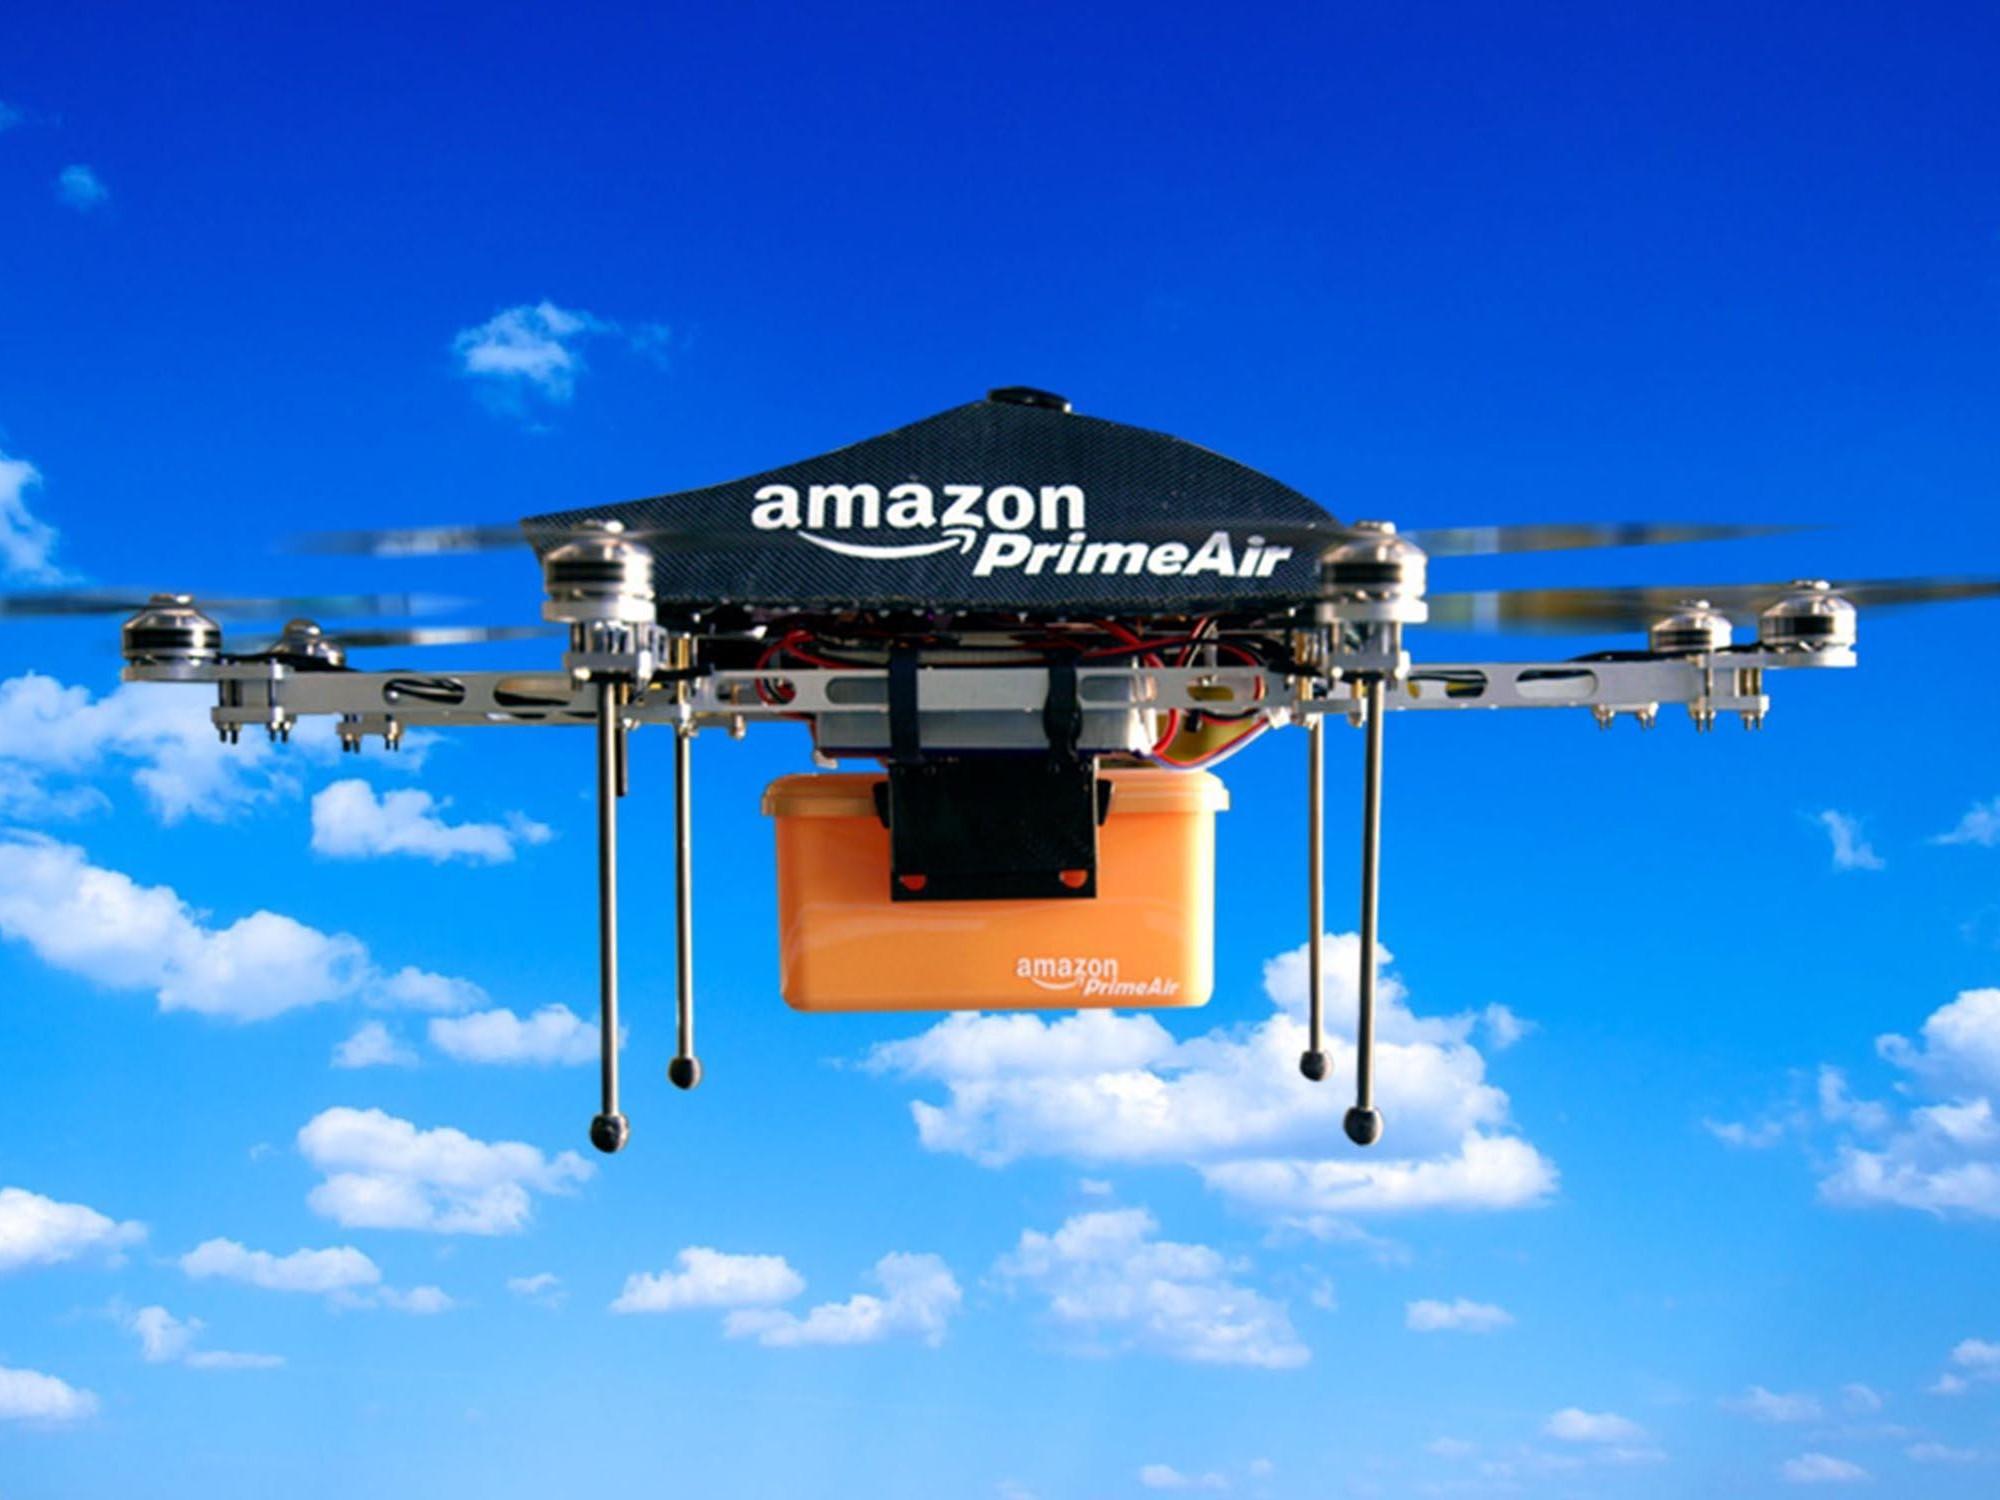 amazon drone delivery area